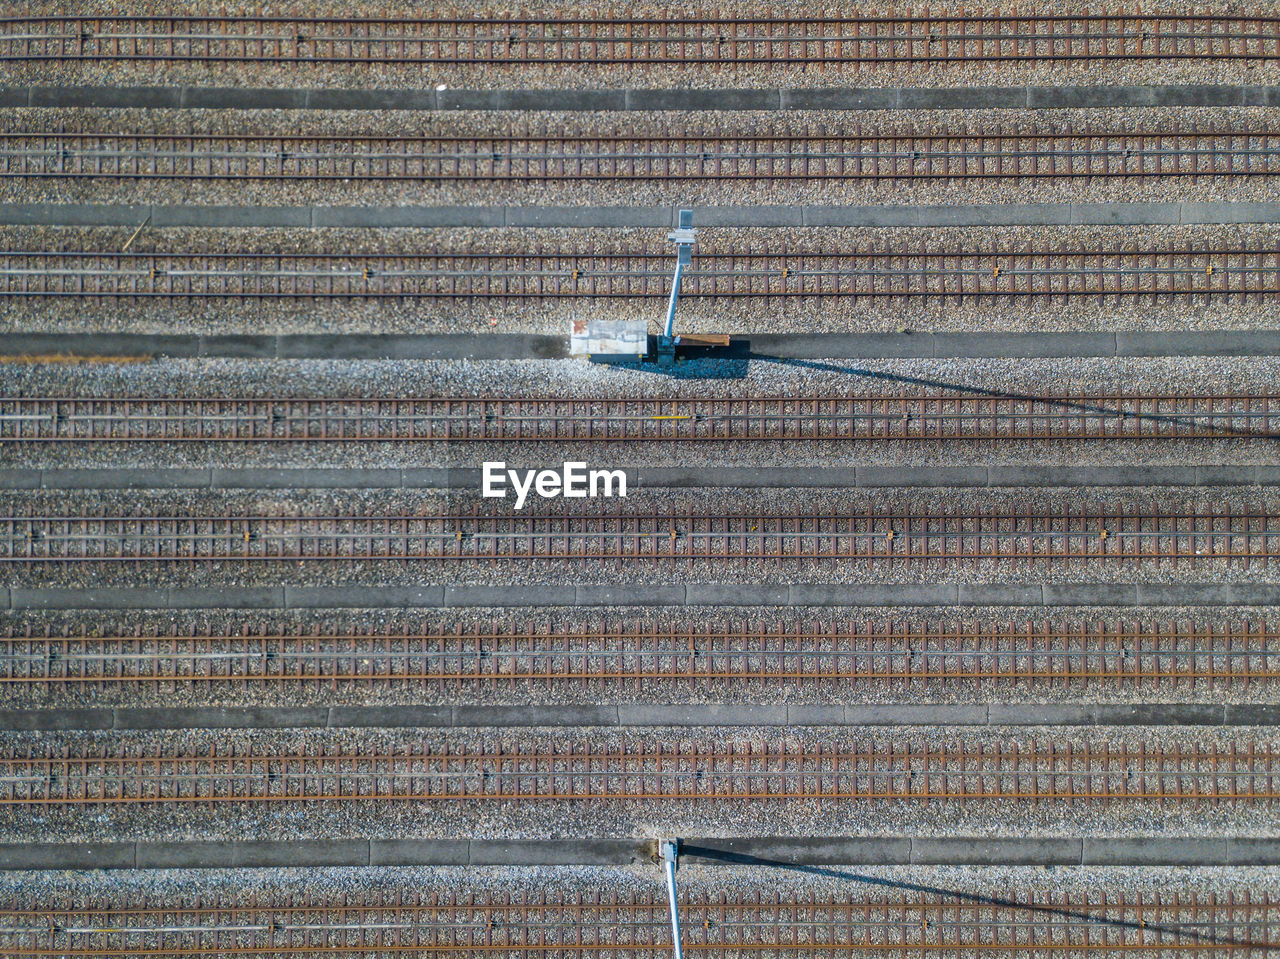 Aerial view of railway tracks